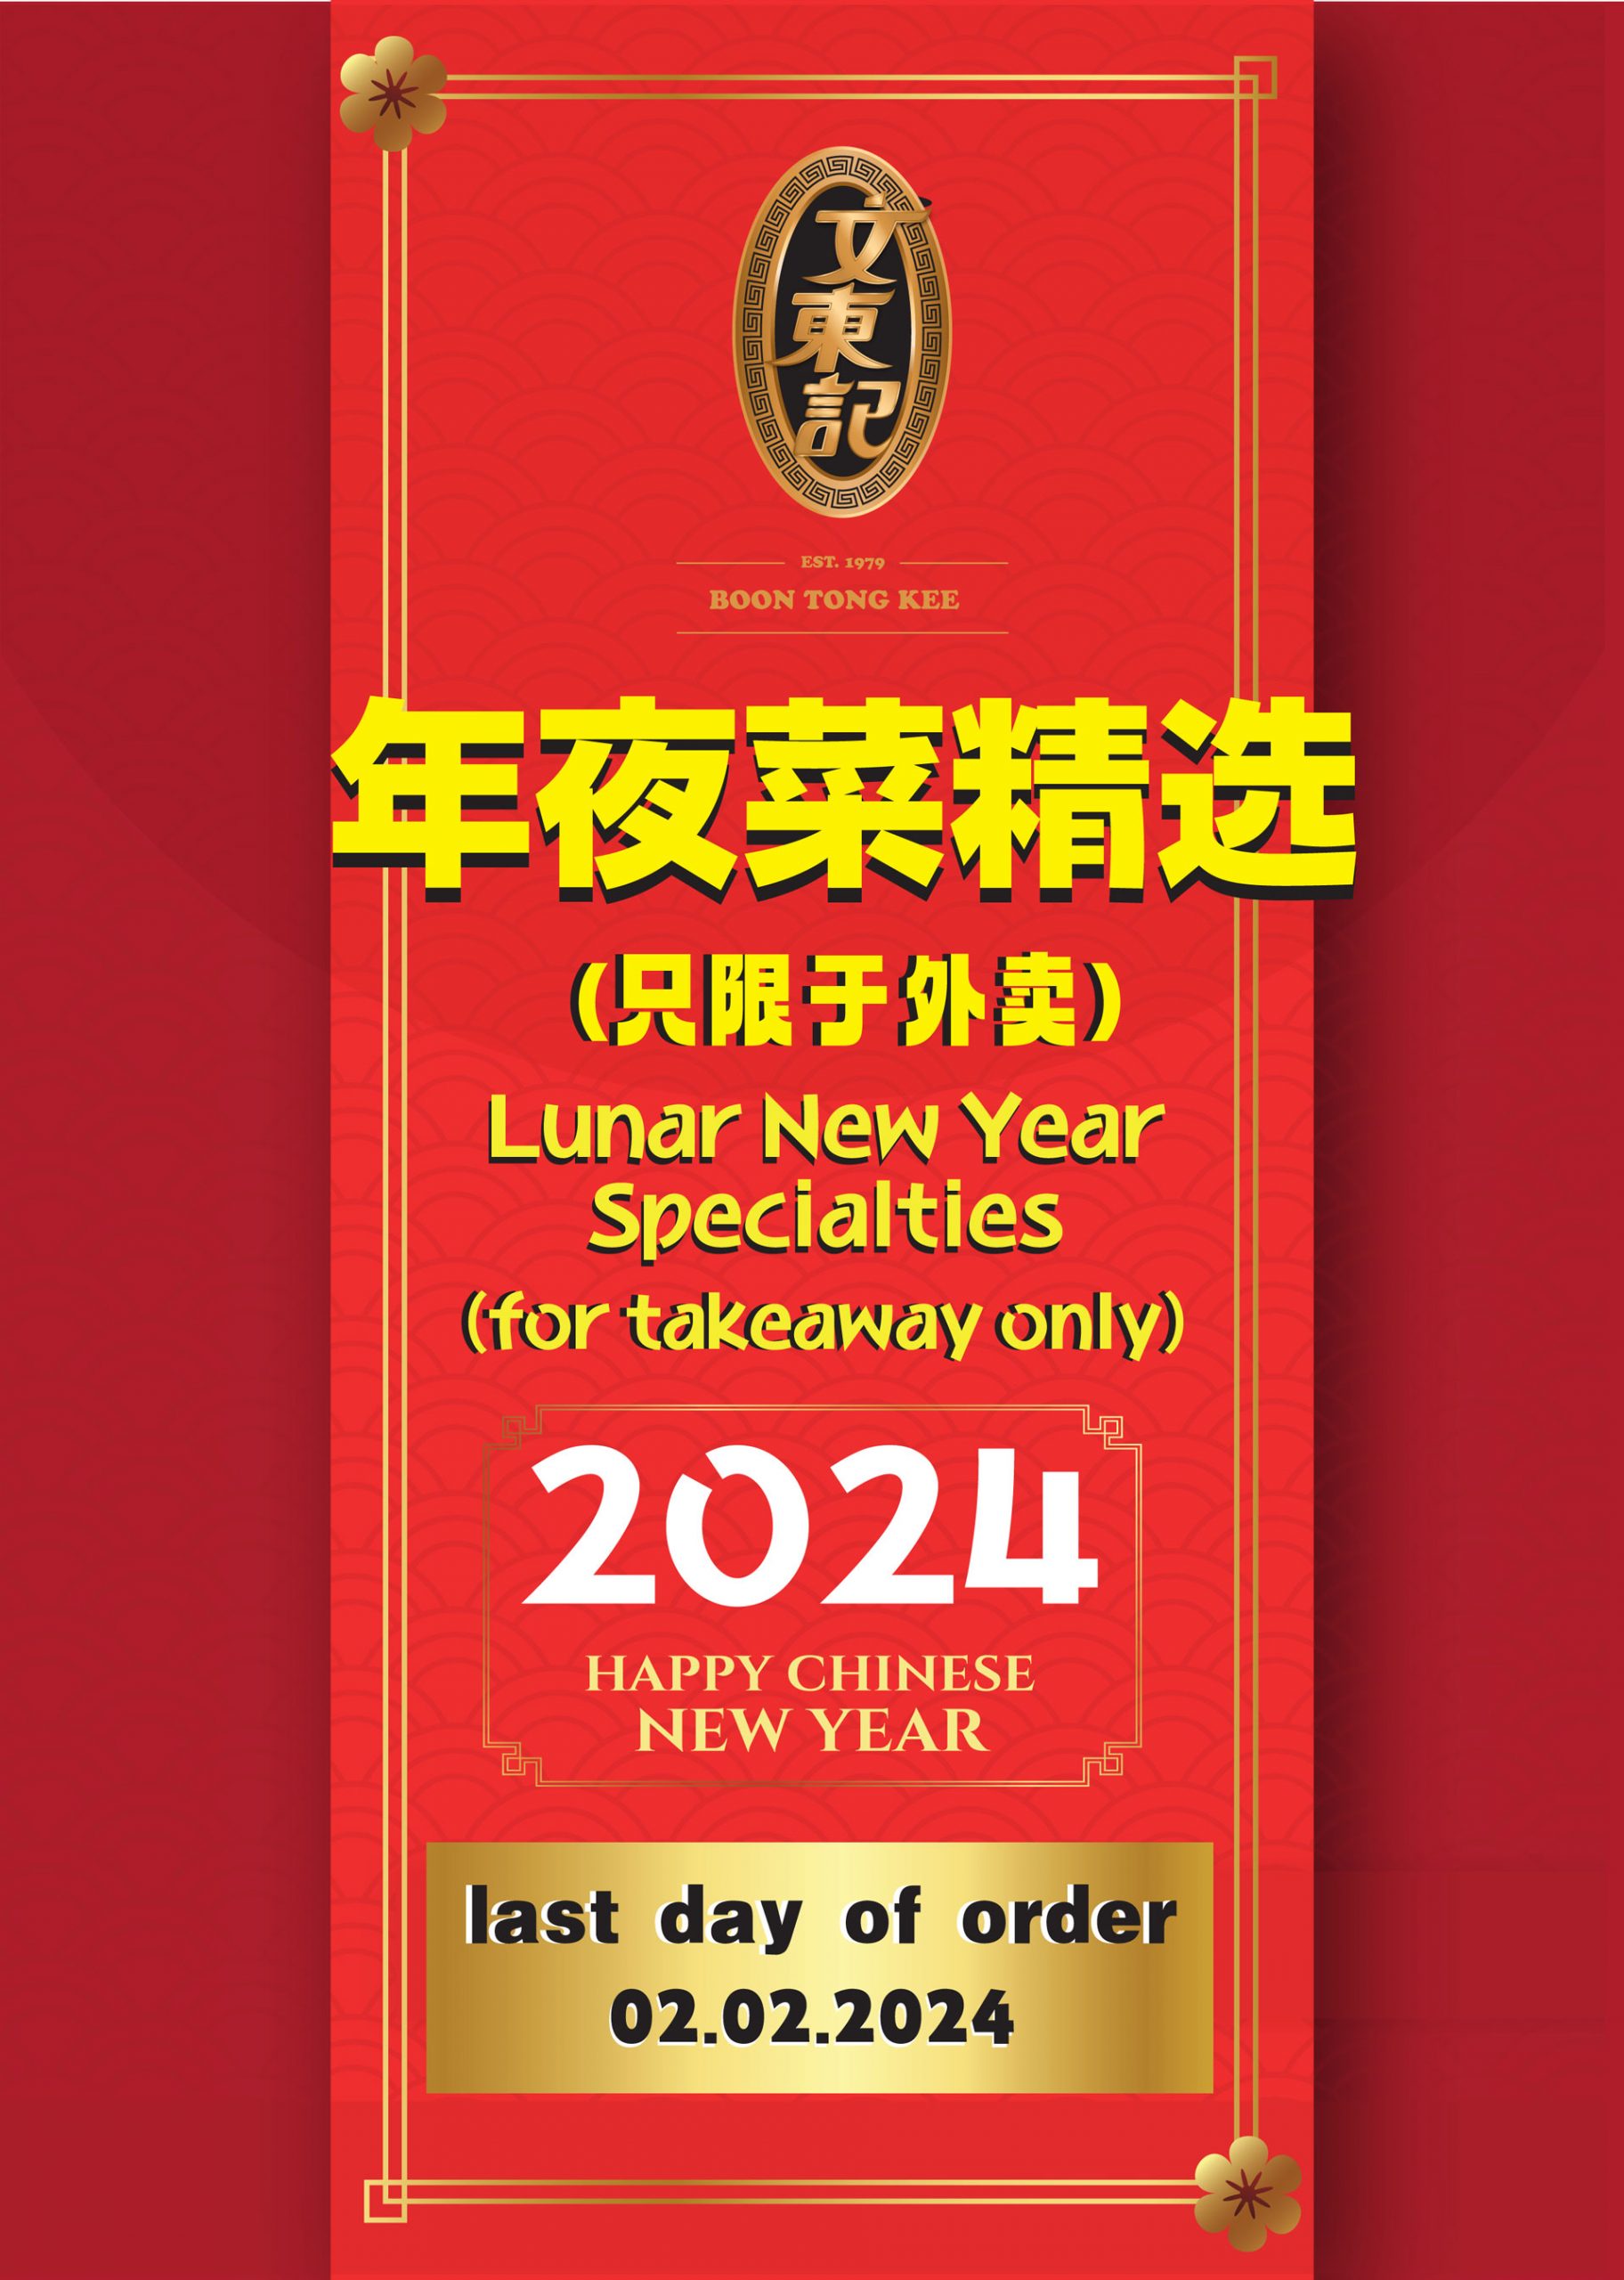 Lunar New Year Specialites 2024